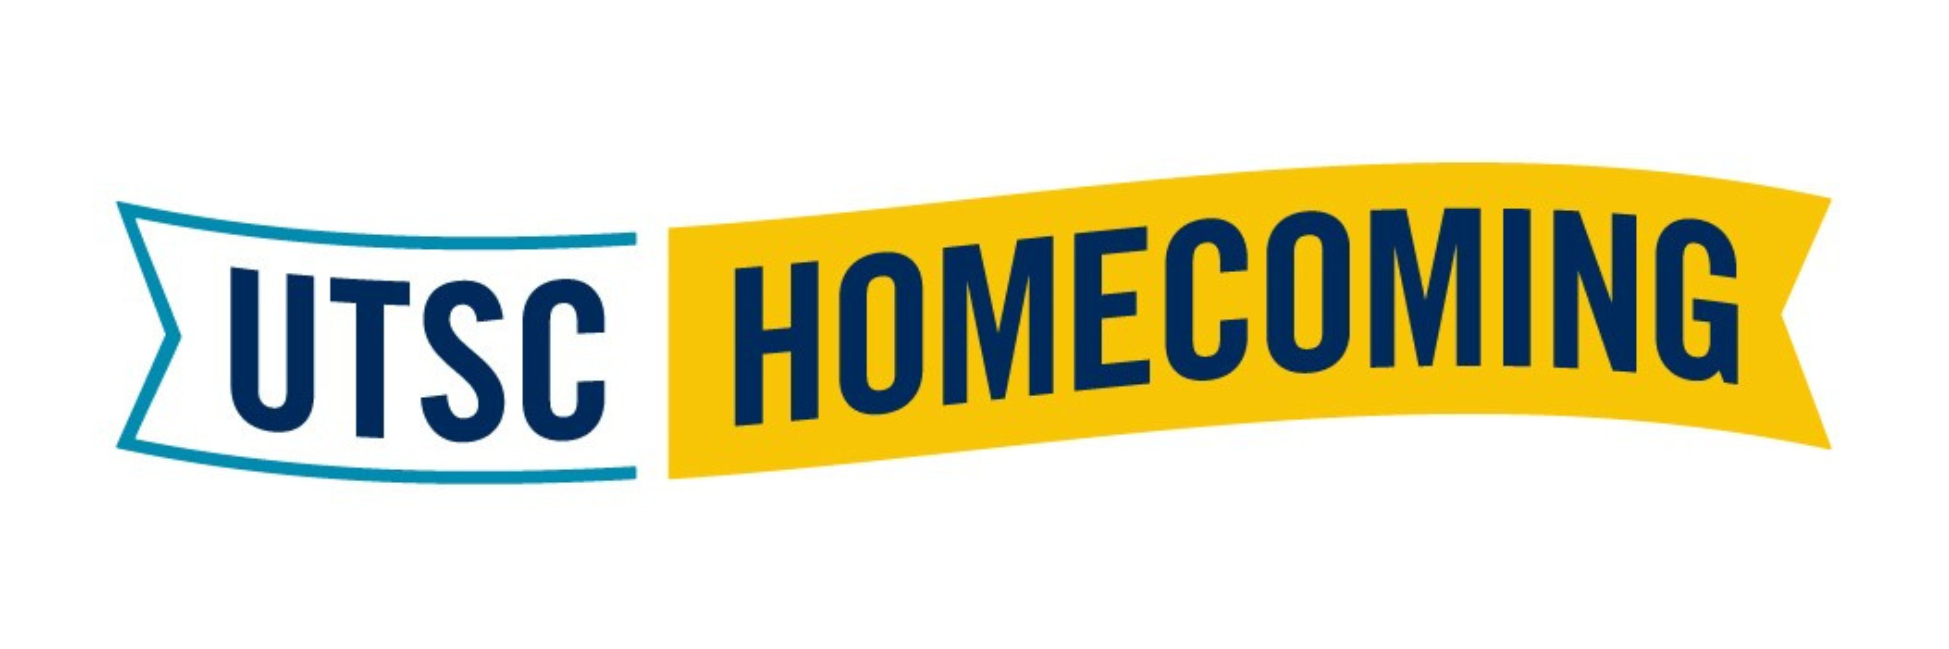 UTSC Homecoming banner.